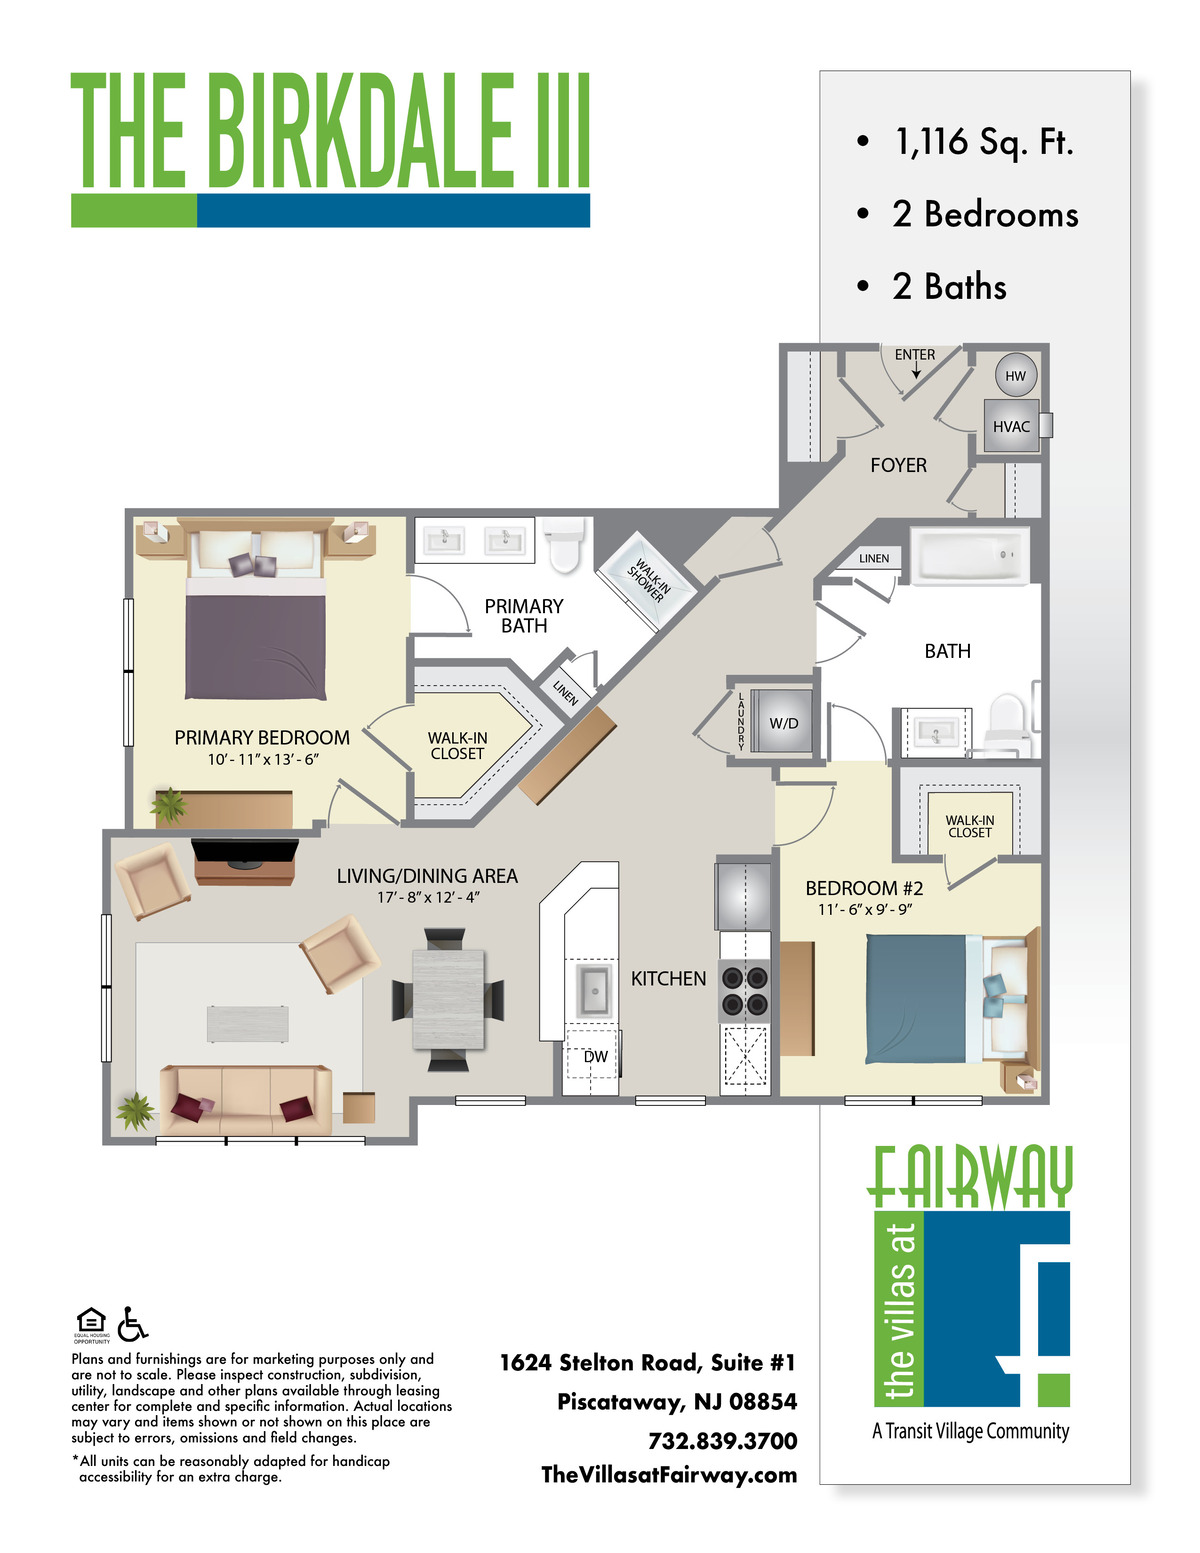 The Villas at Fairway Floor Plan The Birkdale III